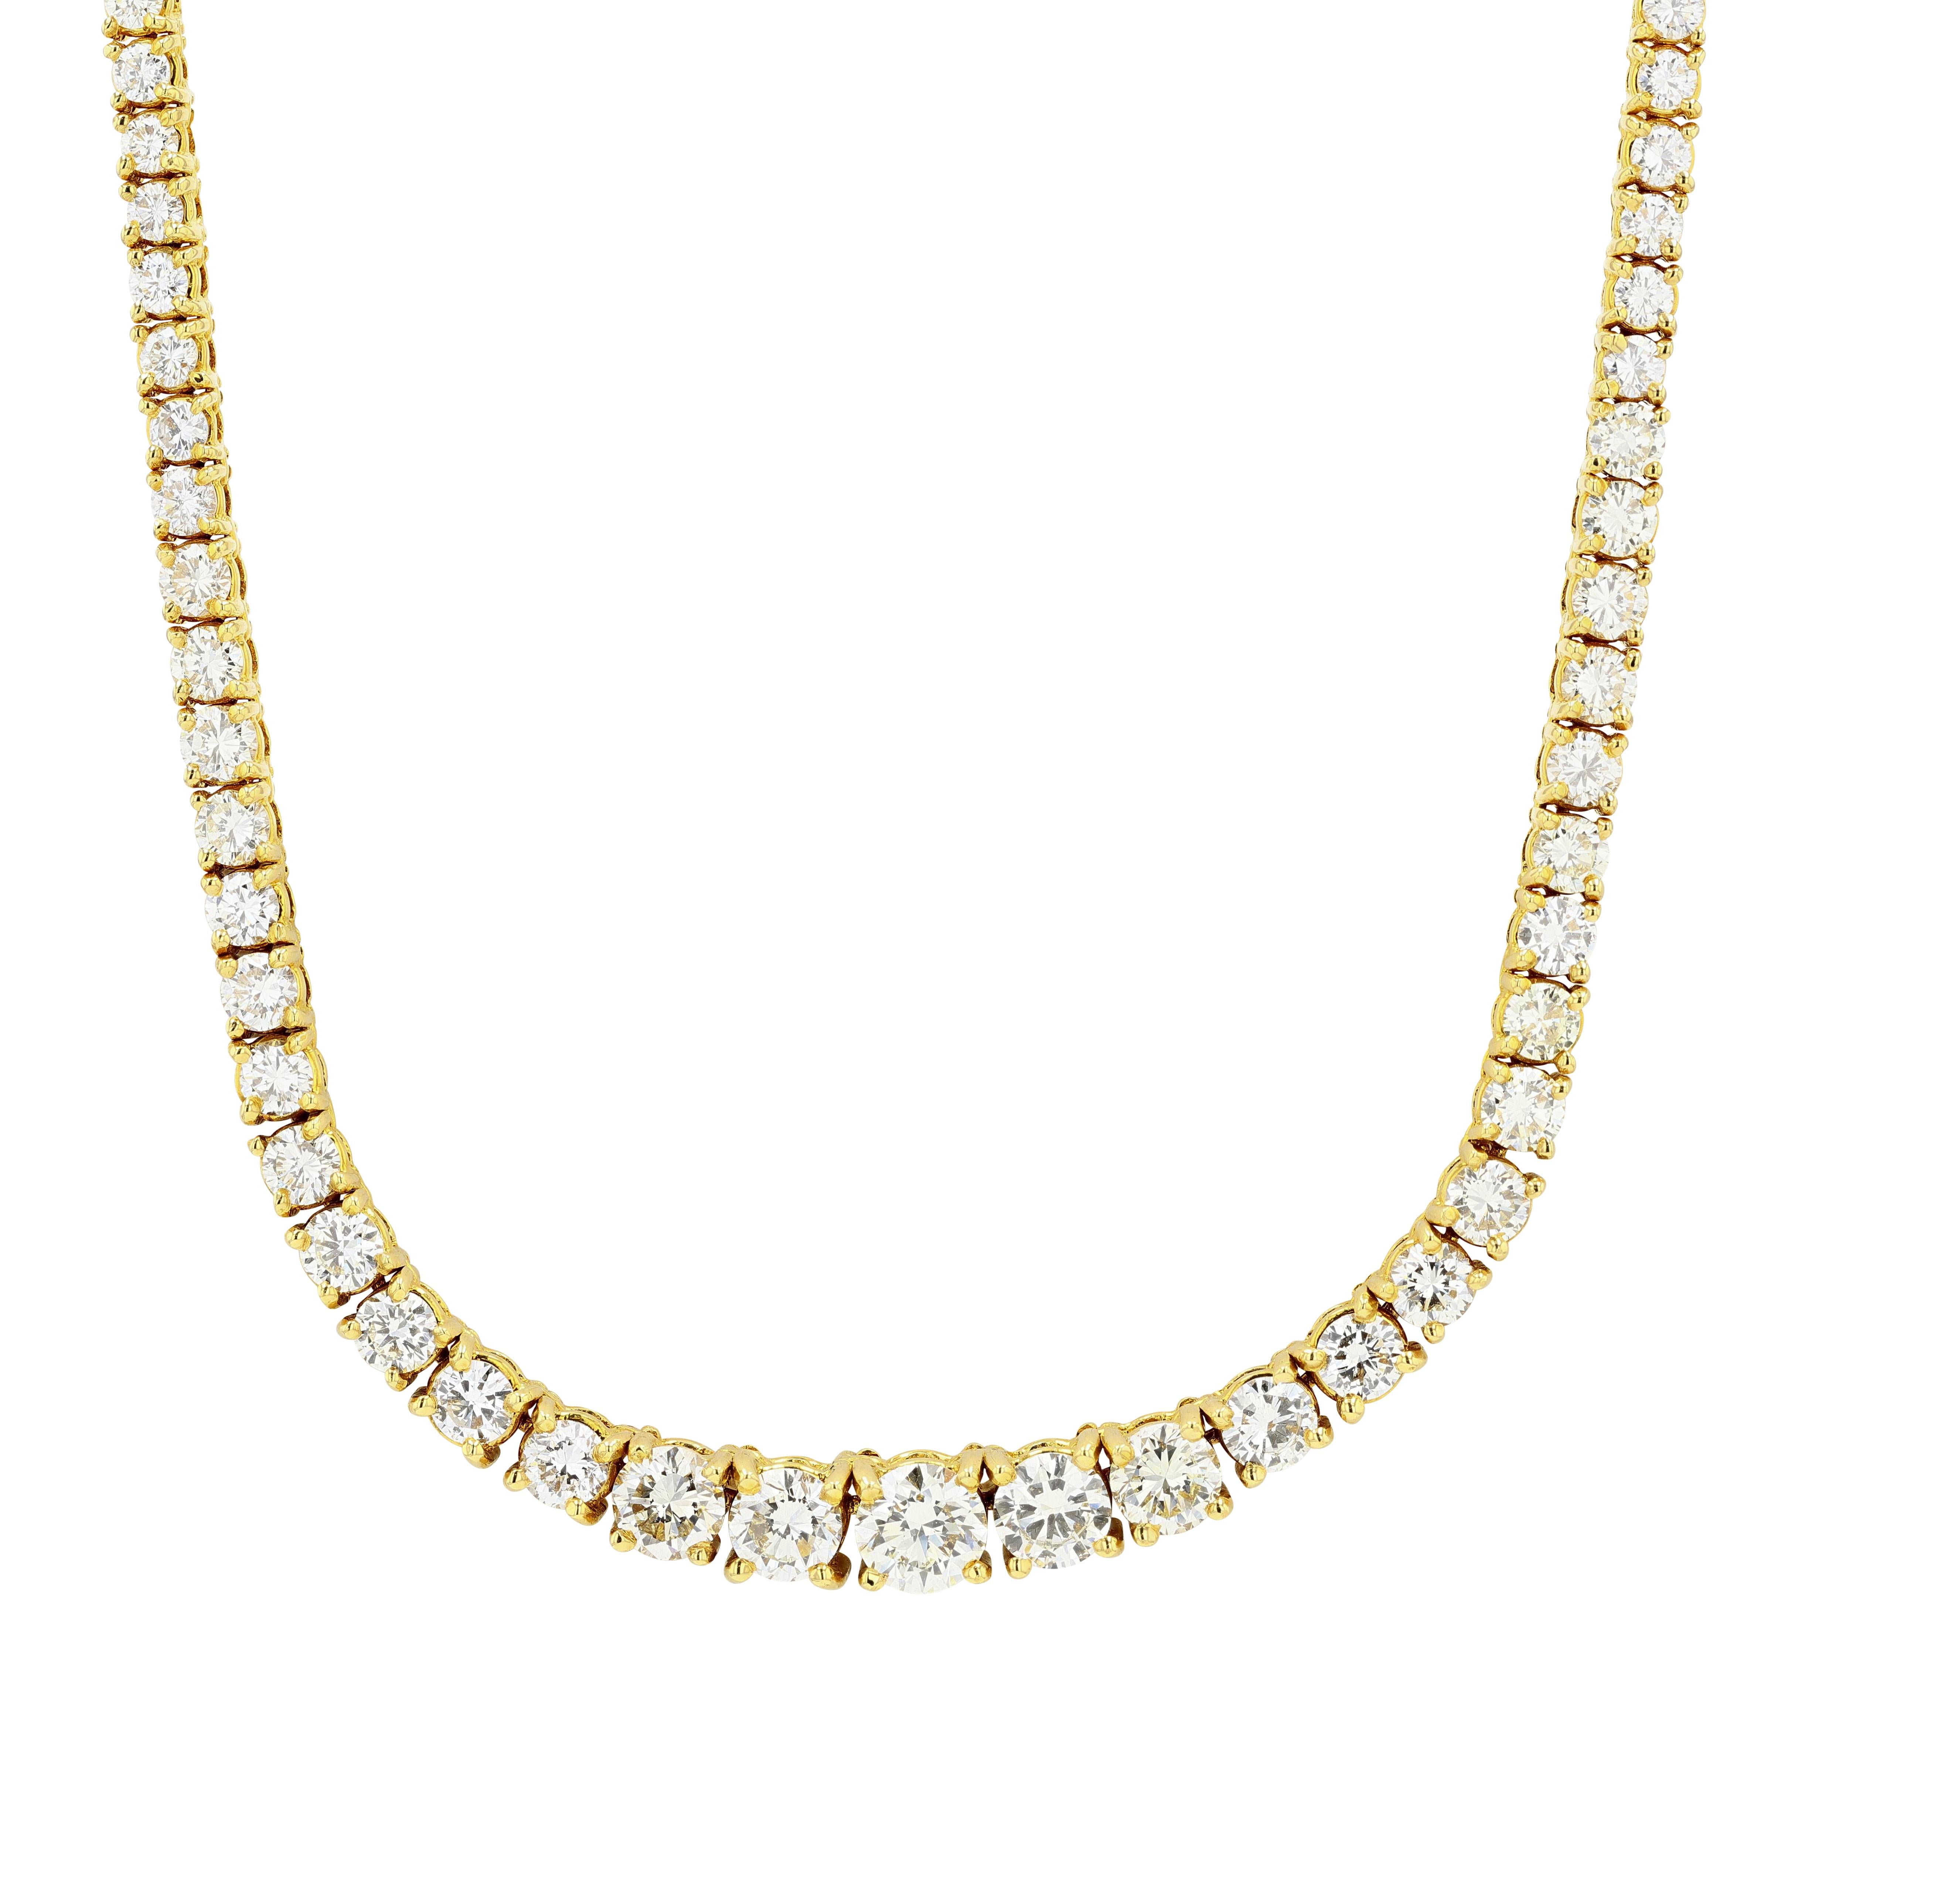 Brilliant Cut 18k Yellow Gold 15.17 Carat Graduated Riviera Diamond Necklace For Sale